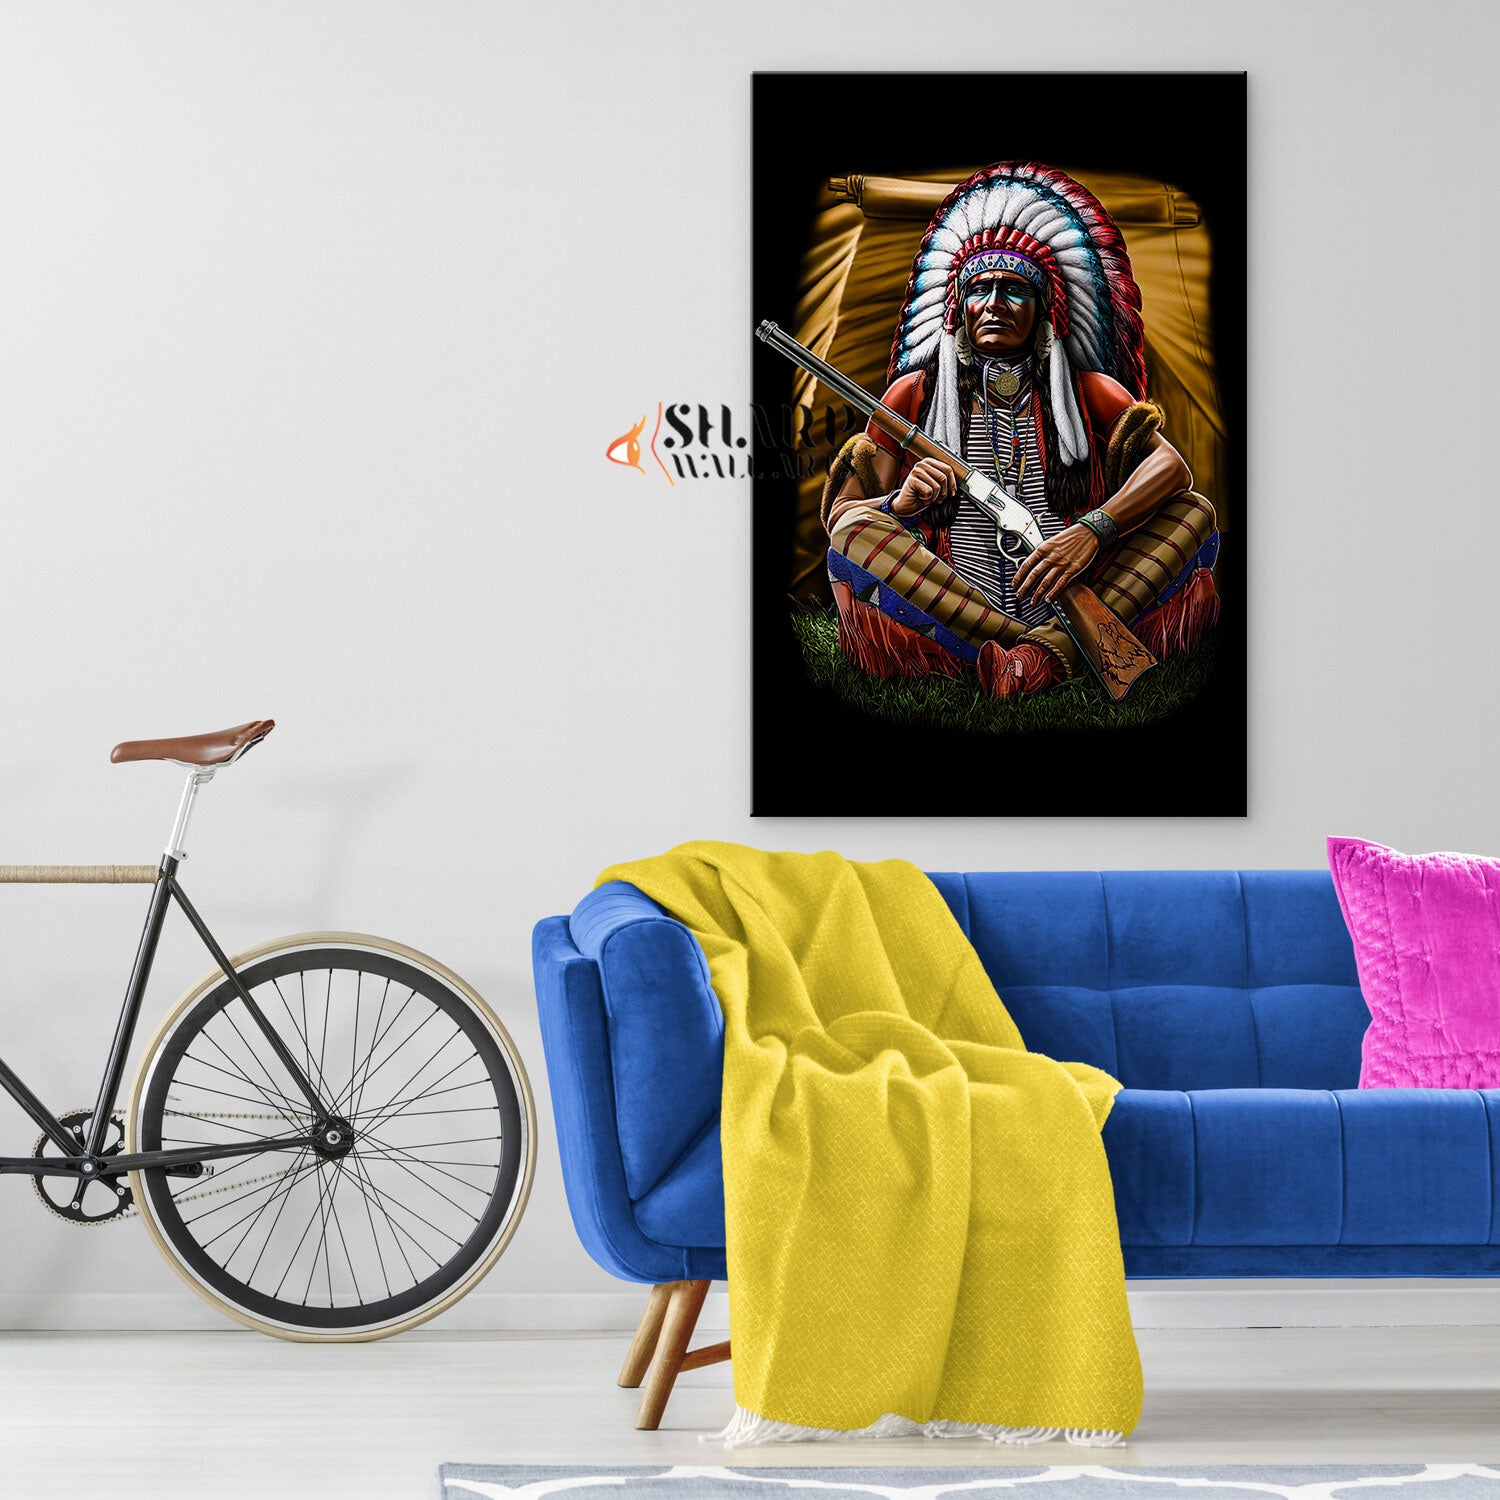 Native American Chief Wall Art Canvas